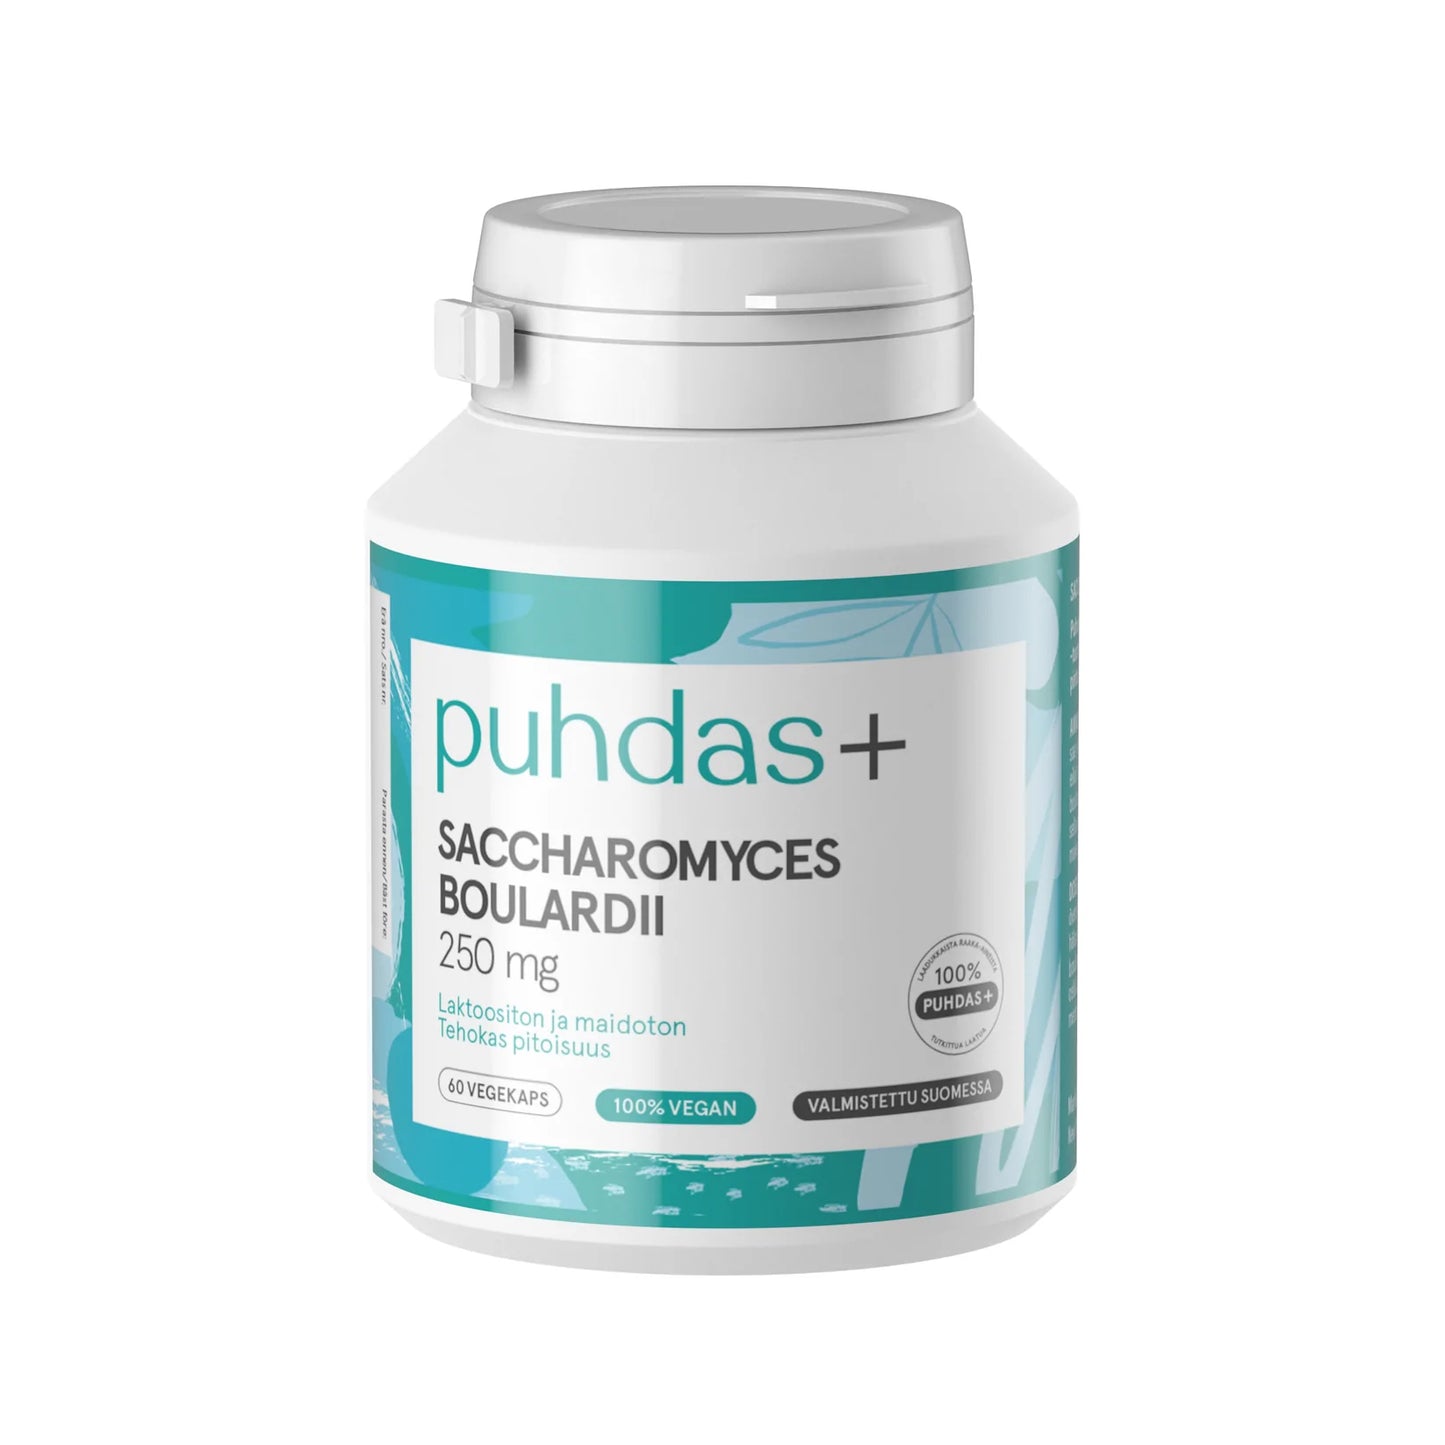 PUHDAS+ Saccharomyces boulardii  250 mg